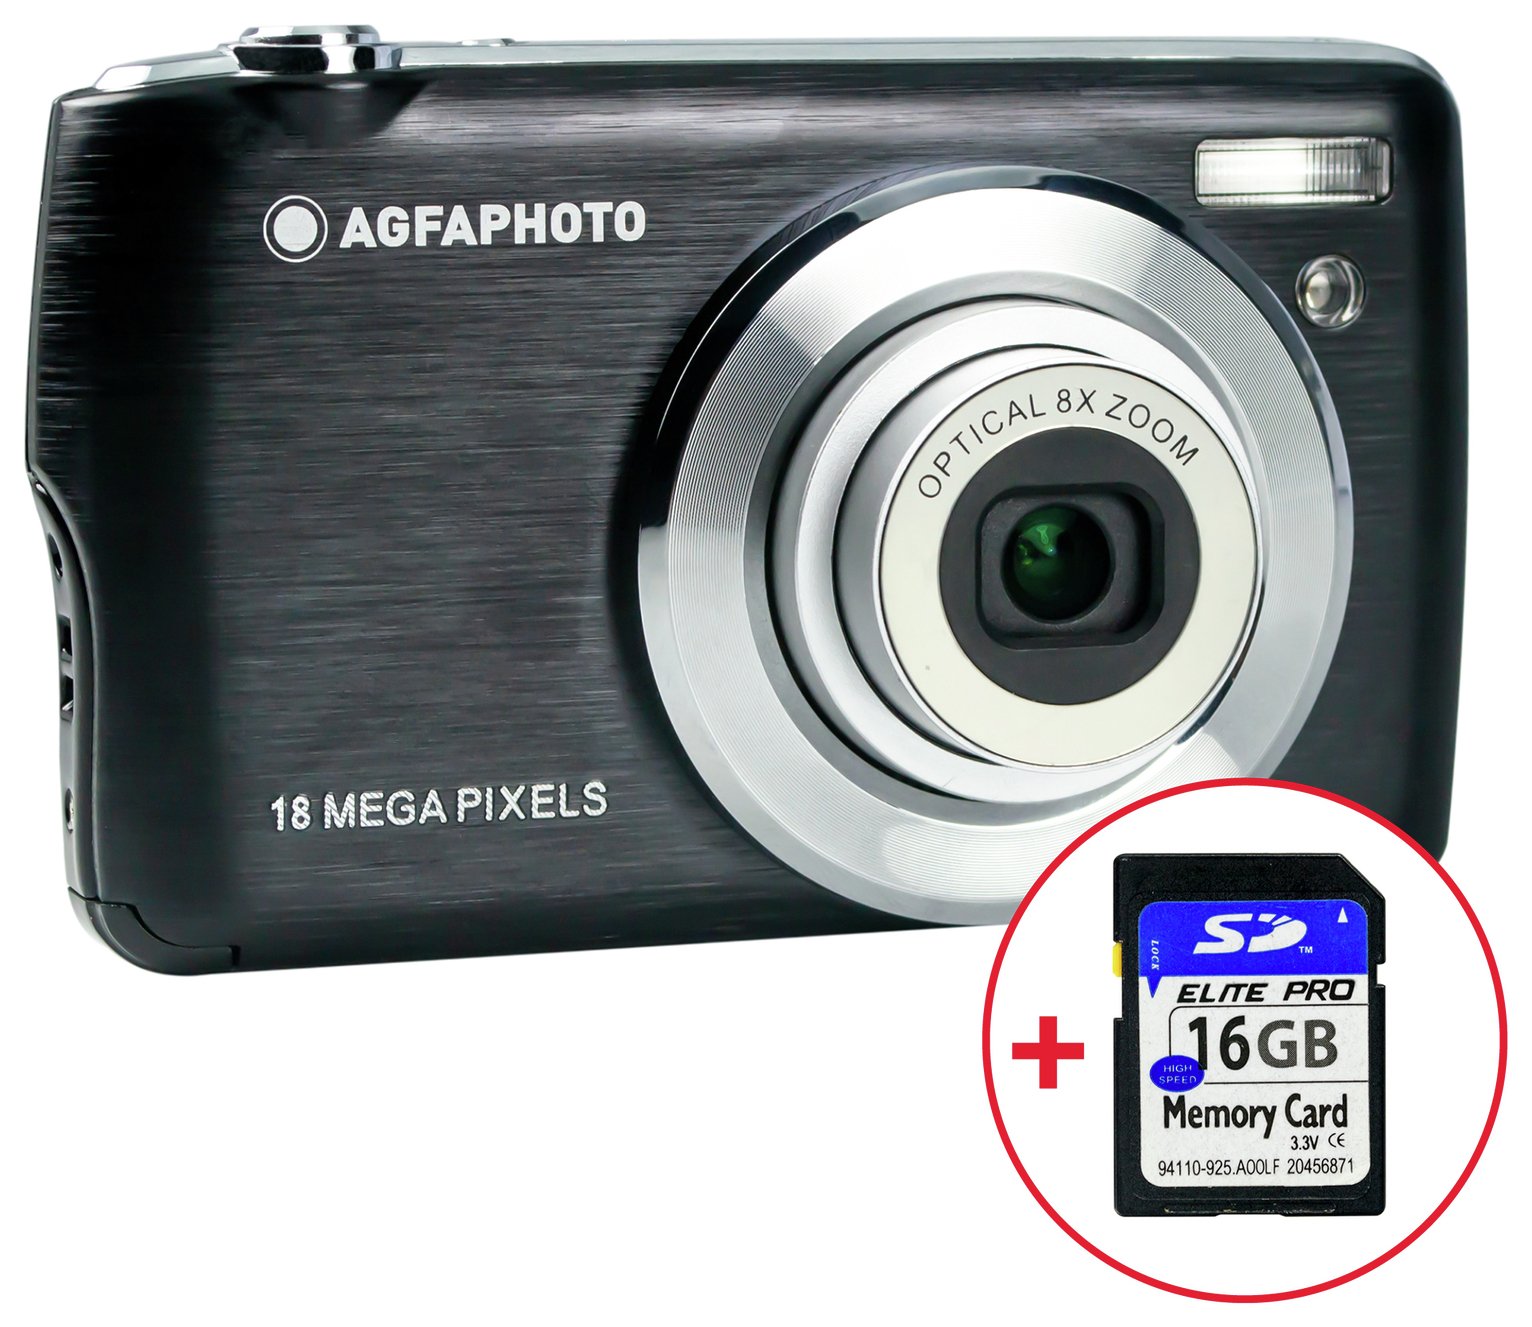 AGFAPHOTO DC8200 18MP 8x Zoom Compact Digital Camera - Black